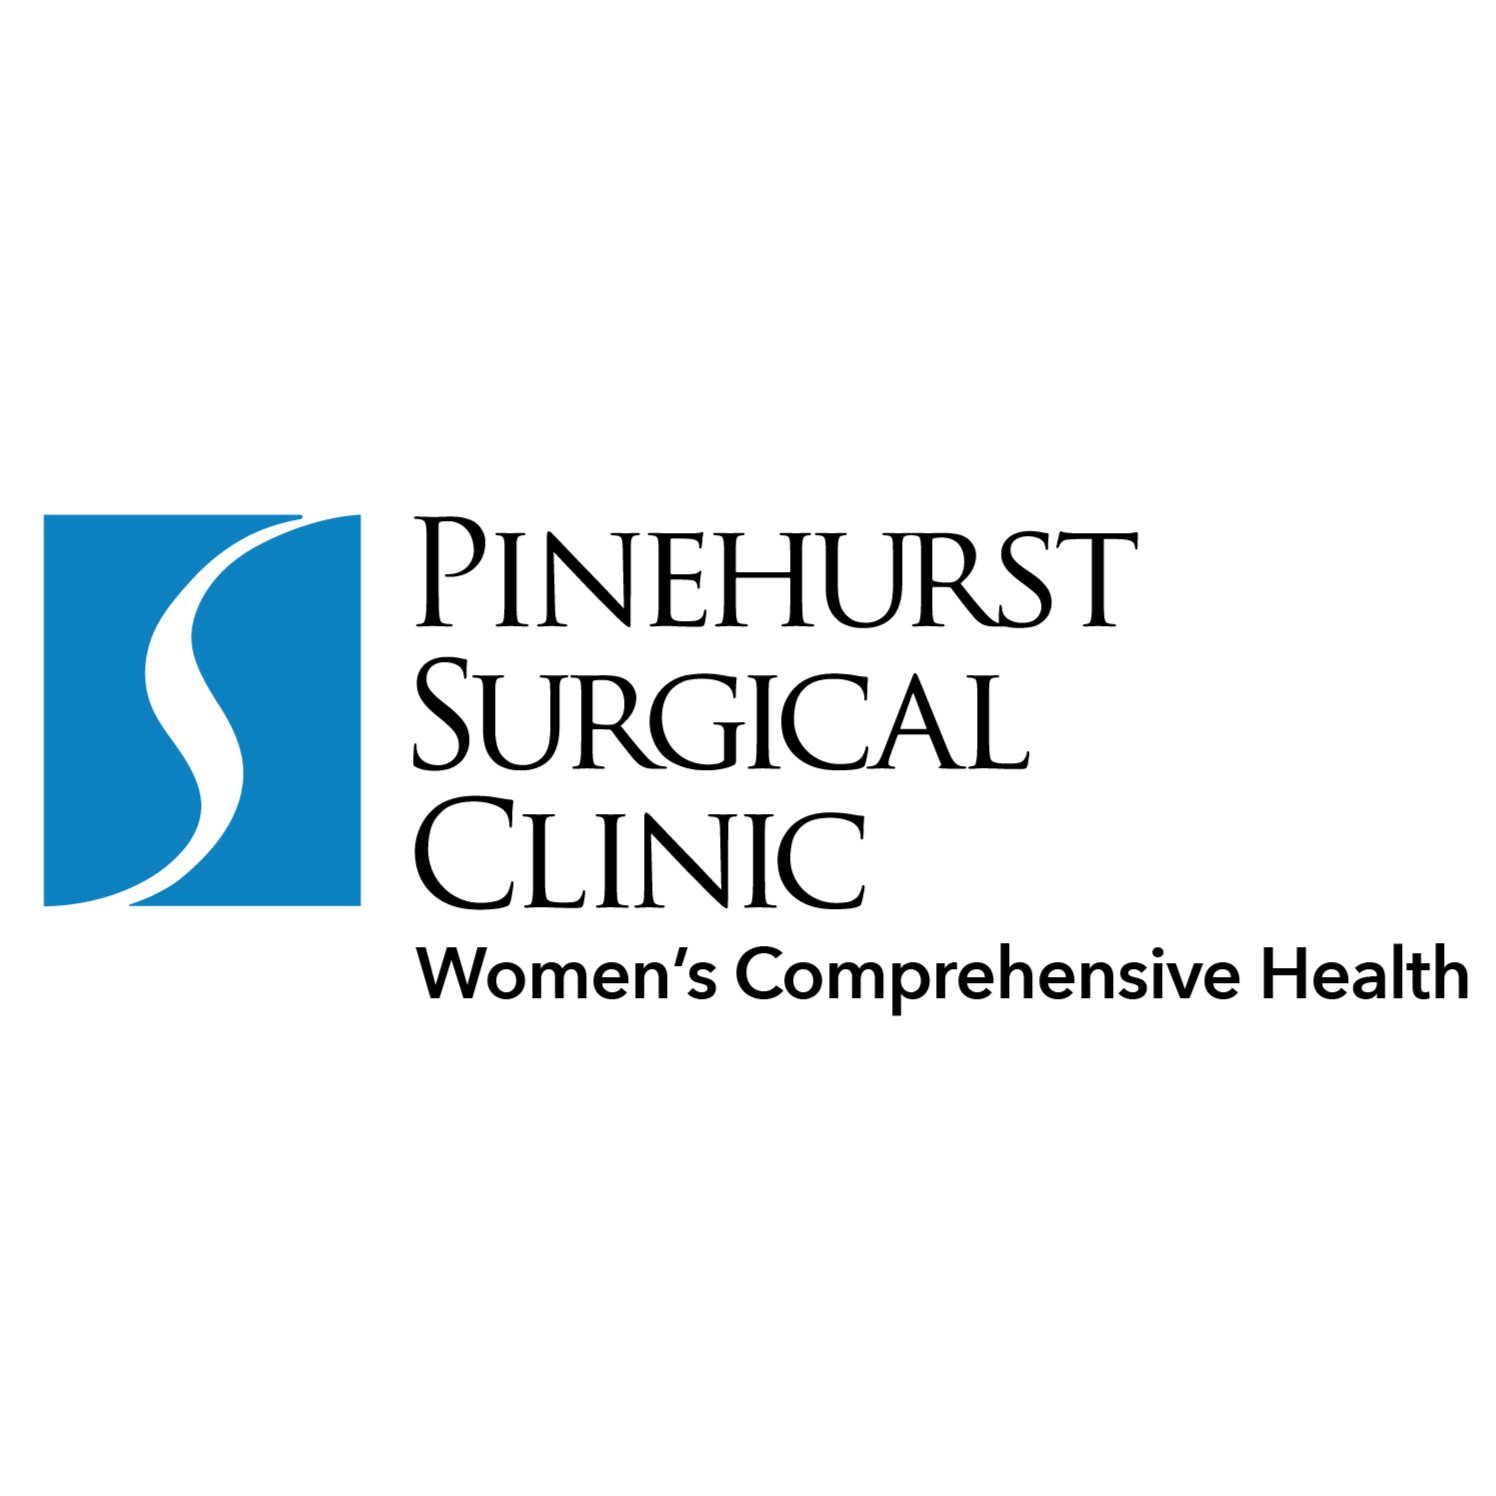 Pinehurst Surgical Clinic Women's Comprehensive Health Logo